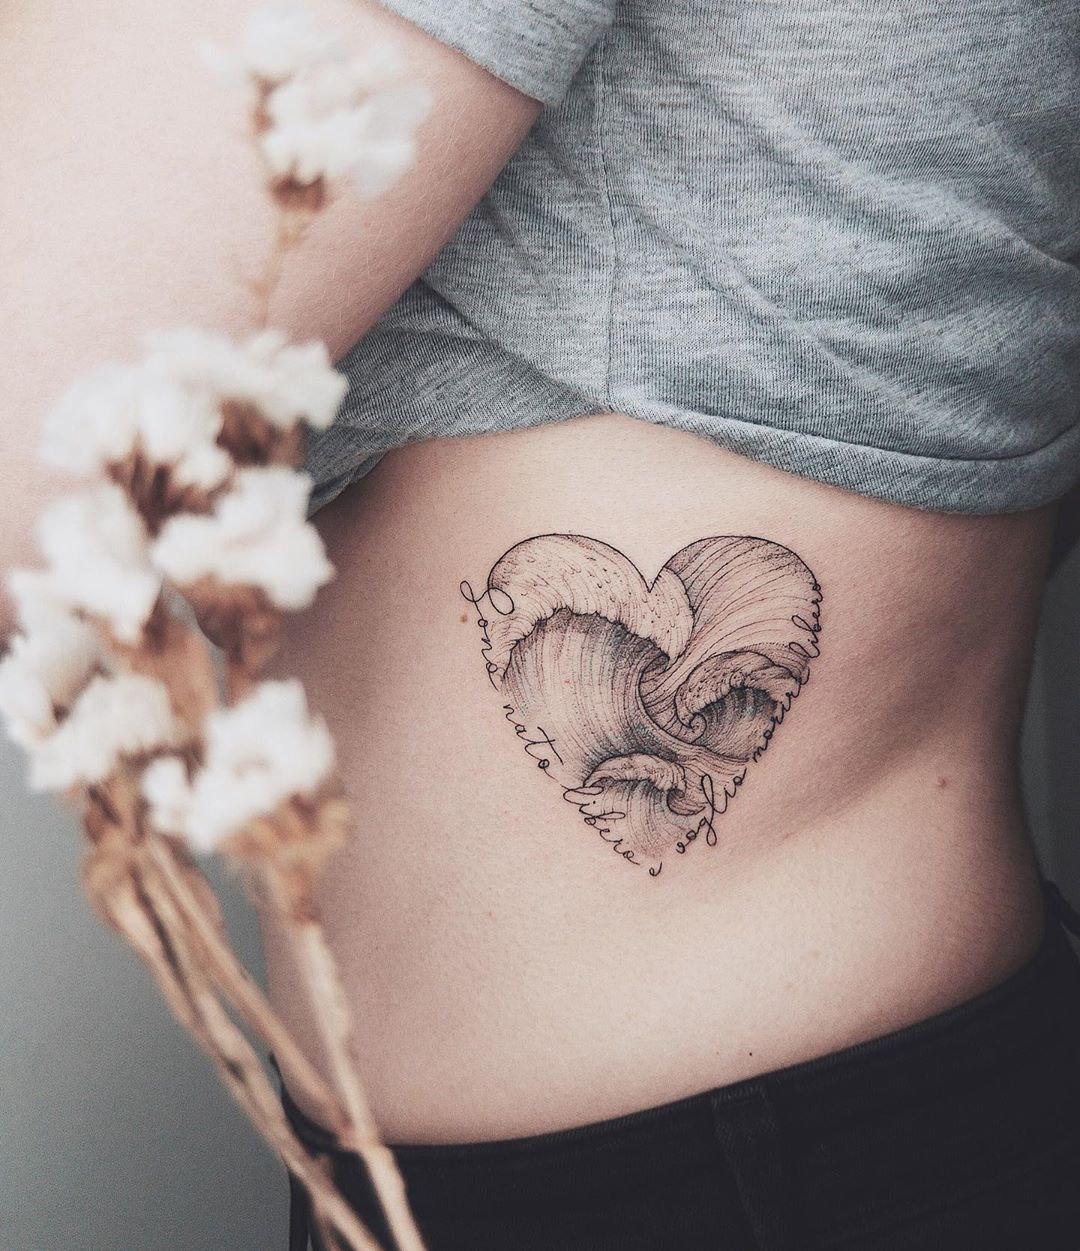 Tattoo Inspiration